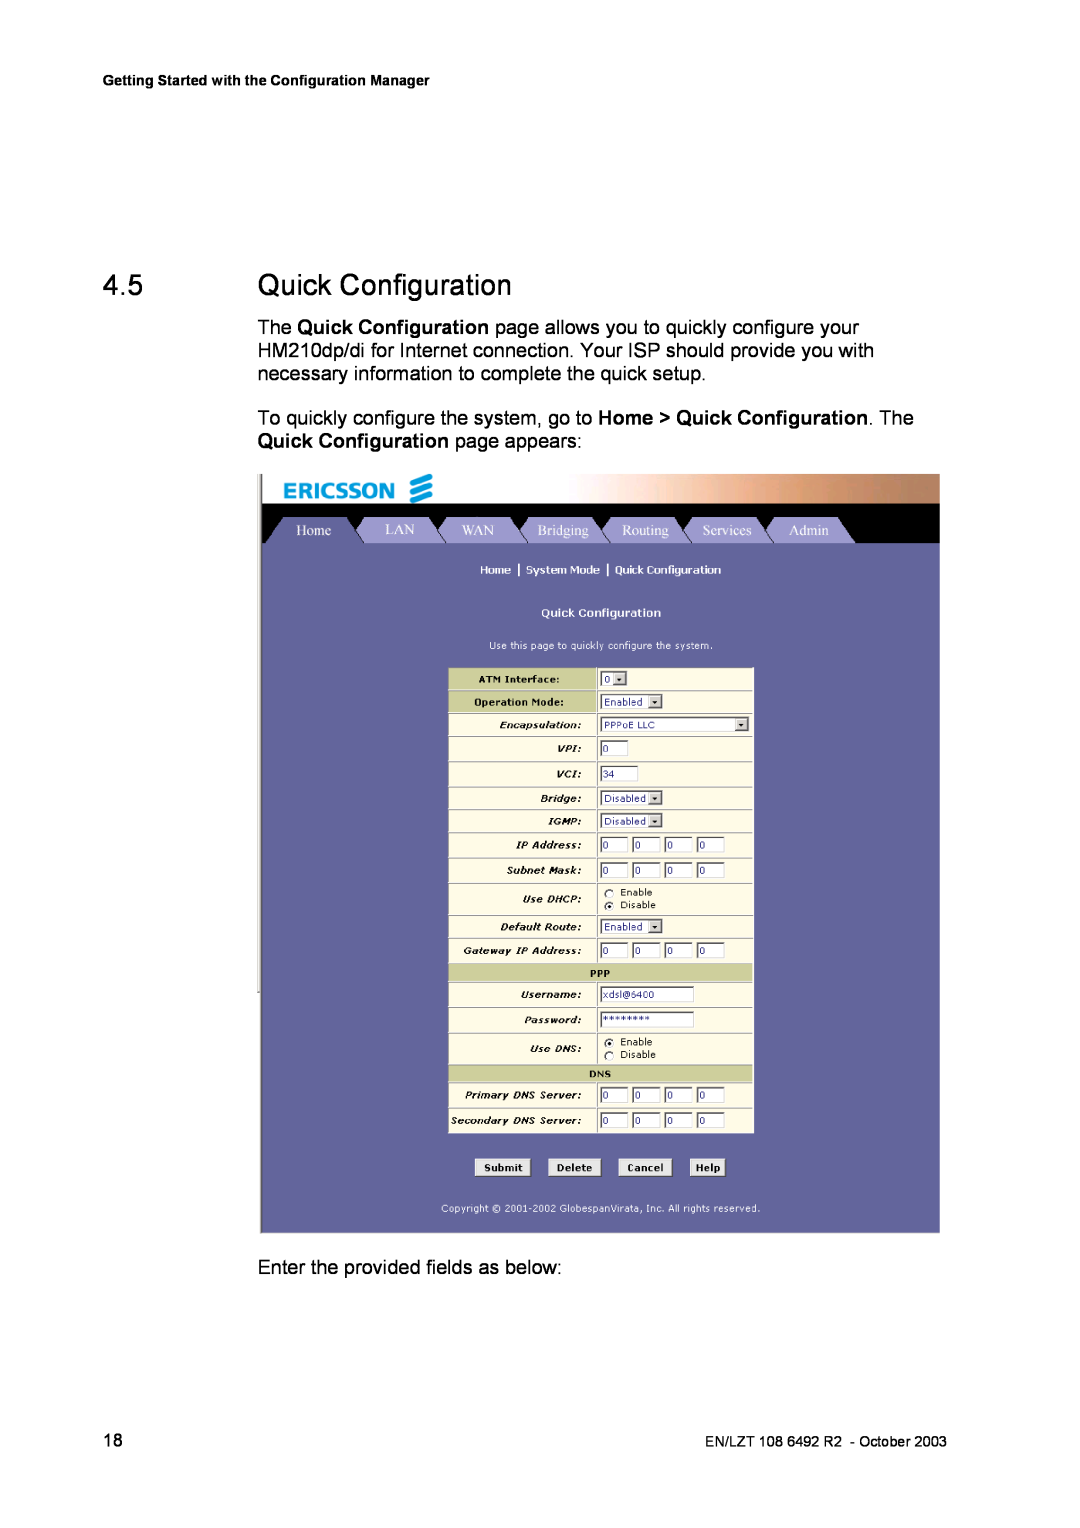 Garmin HM210DP/DI manual Quick Configuration 